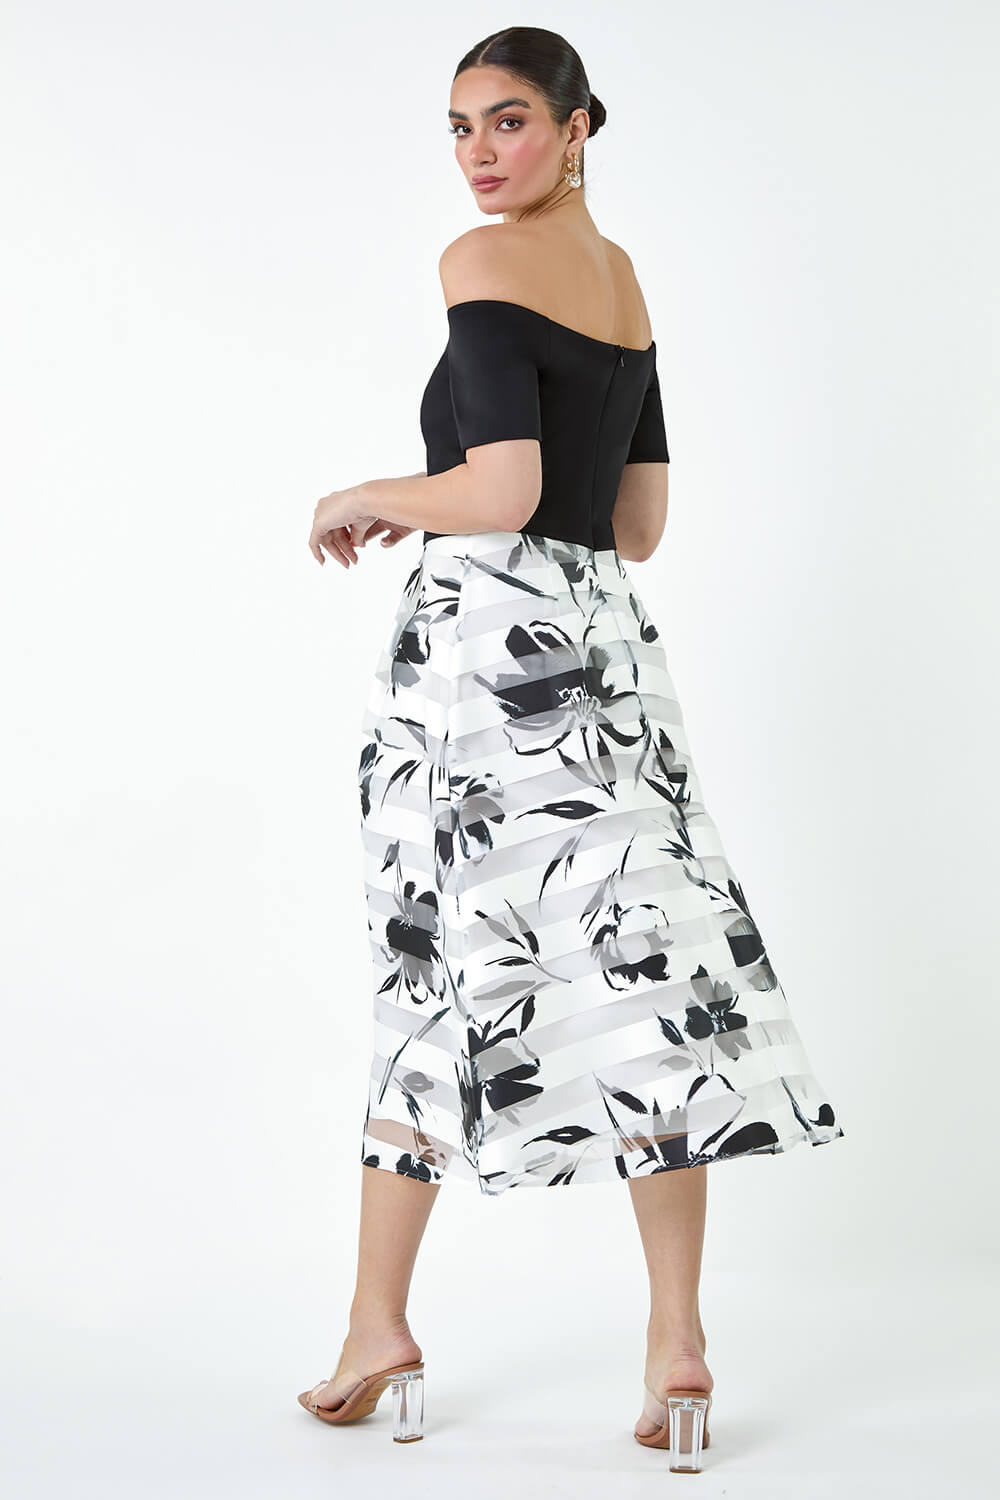 Black Floral Print Premium Stretch Bardot Dress, Image 3 of 5